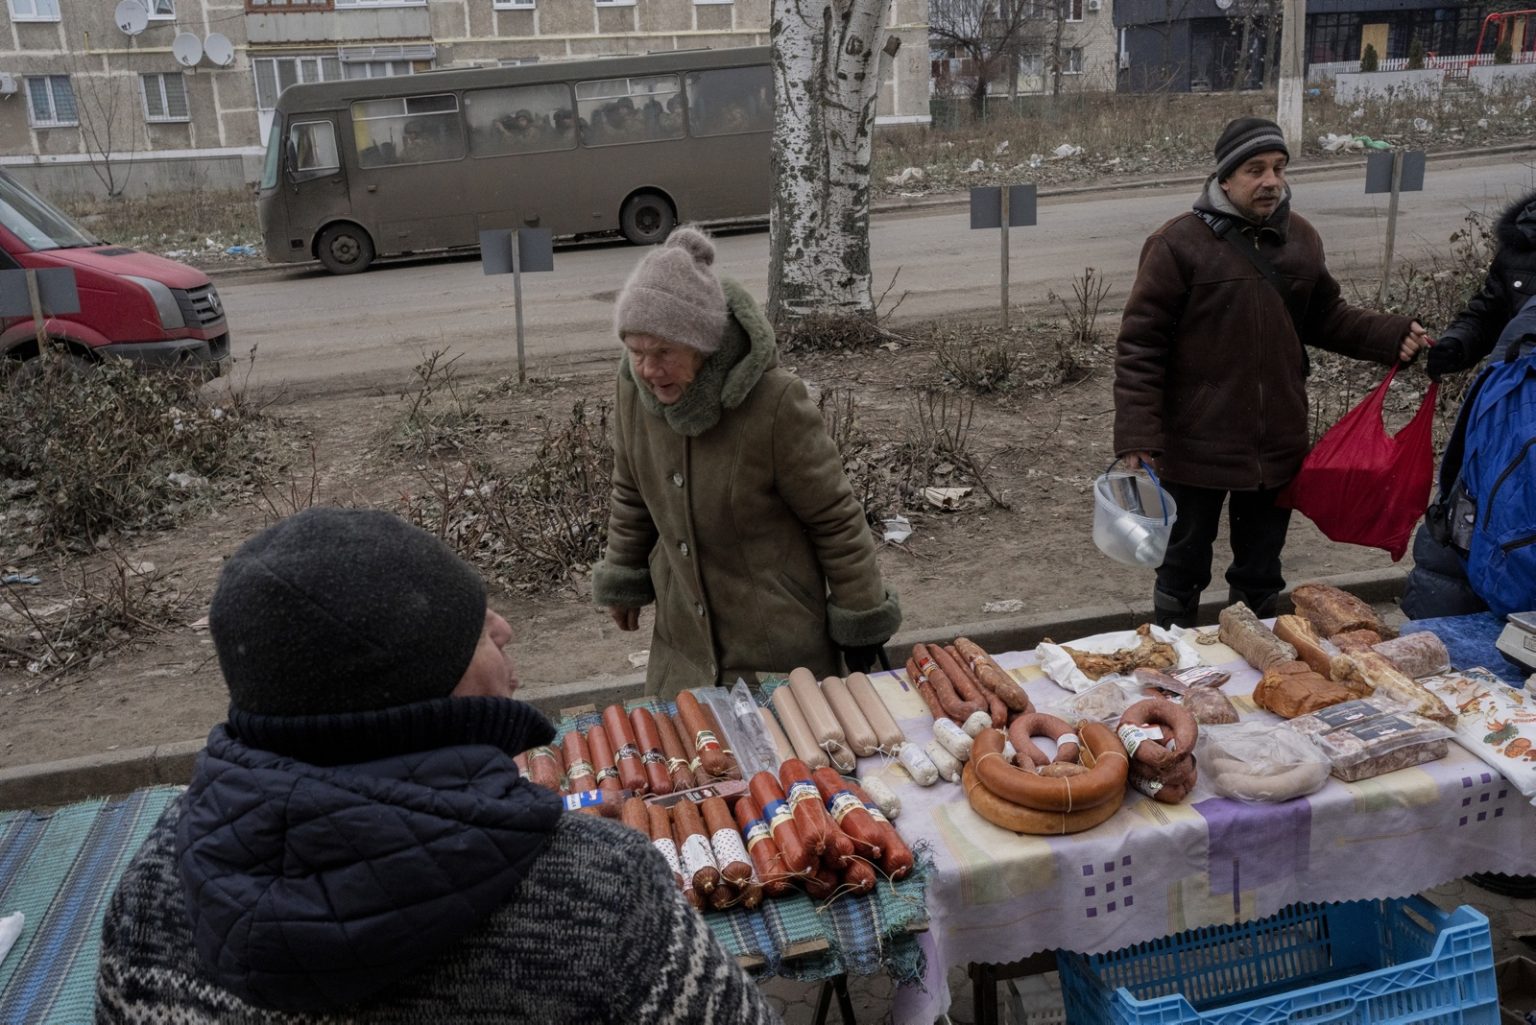 UKRAINE, Bakhmut. January 22, 2023 - Local people shop at a street market in Bakhmut. ><
UCRAINA, Bakhmut. 22 gennaio 2023 - Gli abitanti del luogo fanno acquisti in un mercato di strada a Bakhmut.